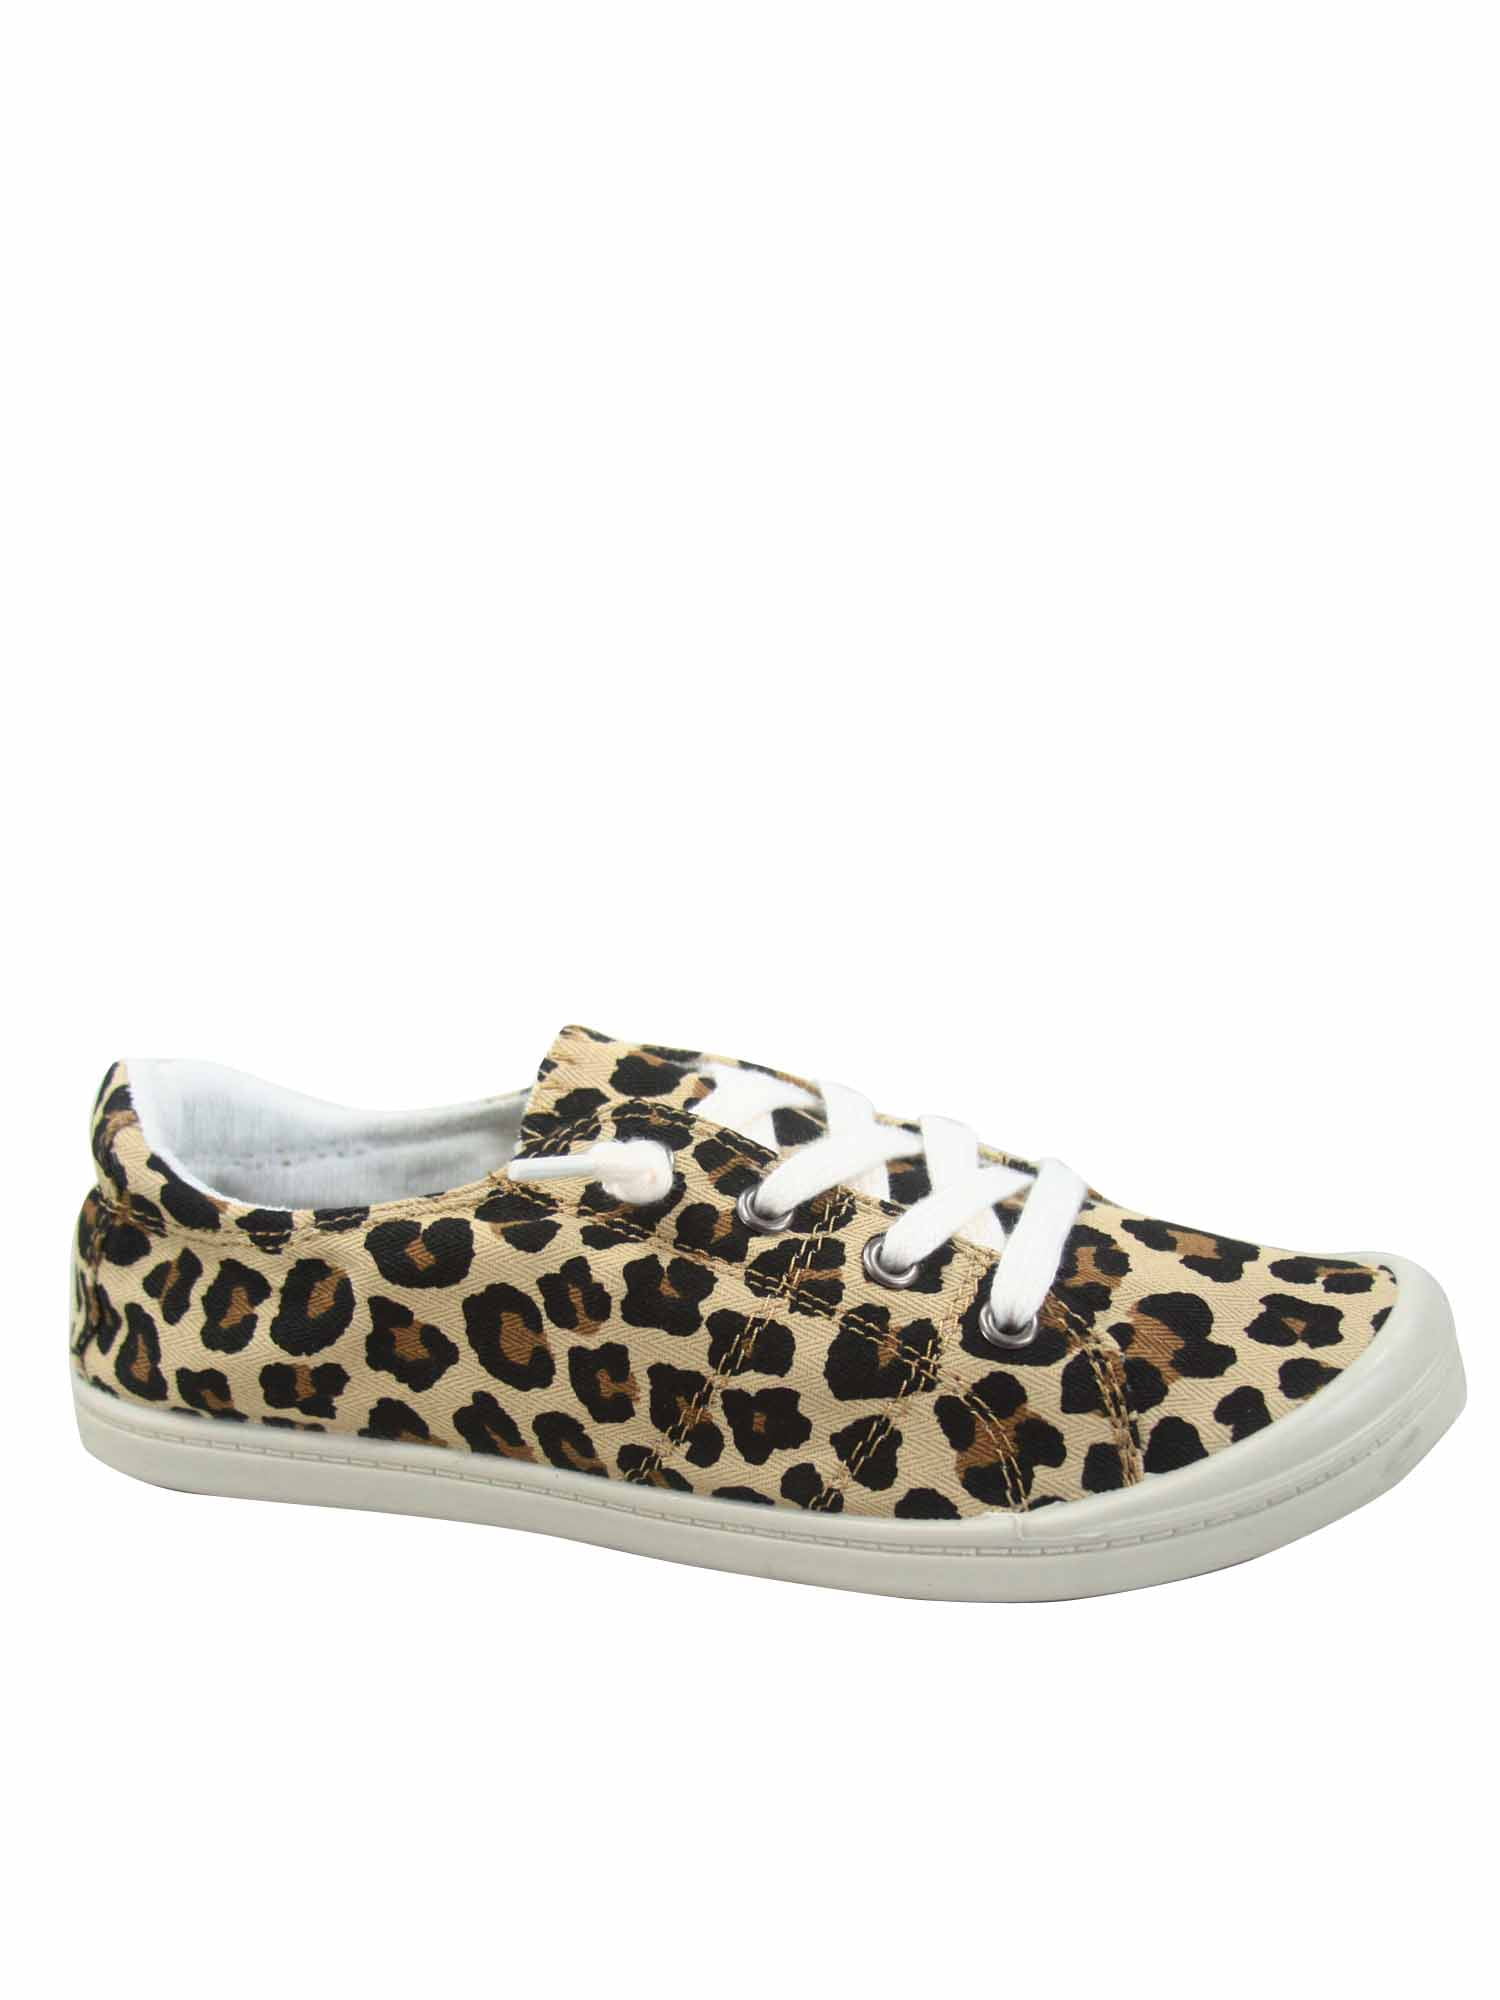 regulere dom Fristelse Zig-s Women's Causal Comfort Slip On Round Toe Flat Sneaker Shoes ( Leopard,  7) - Walmart.com